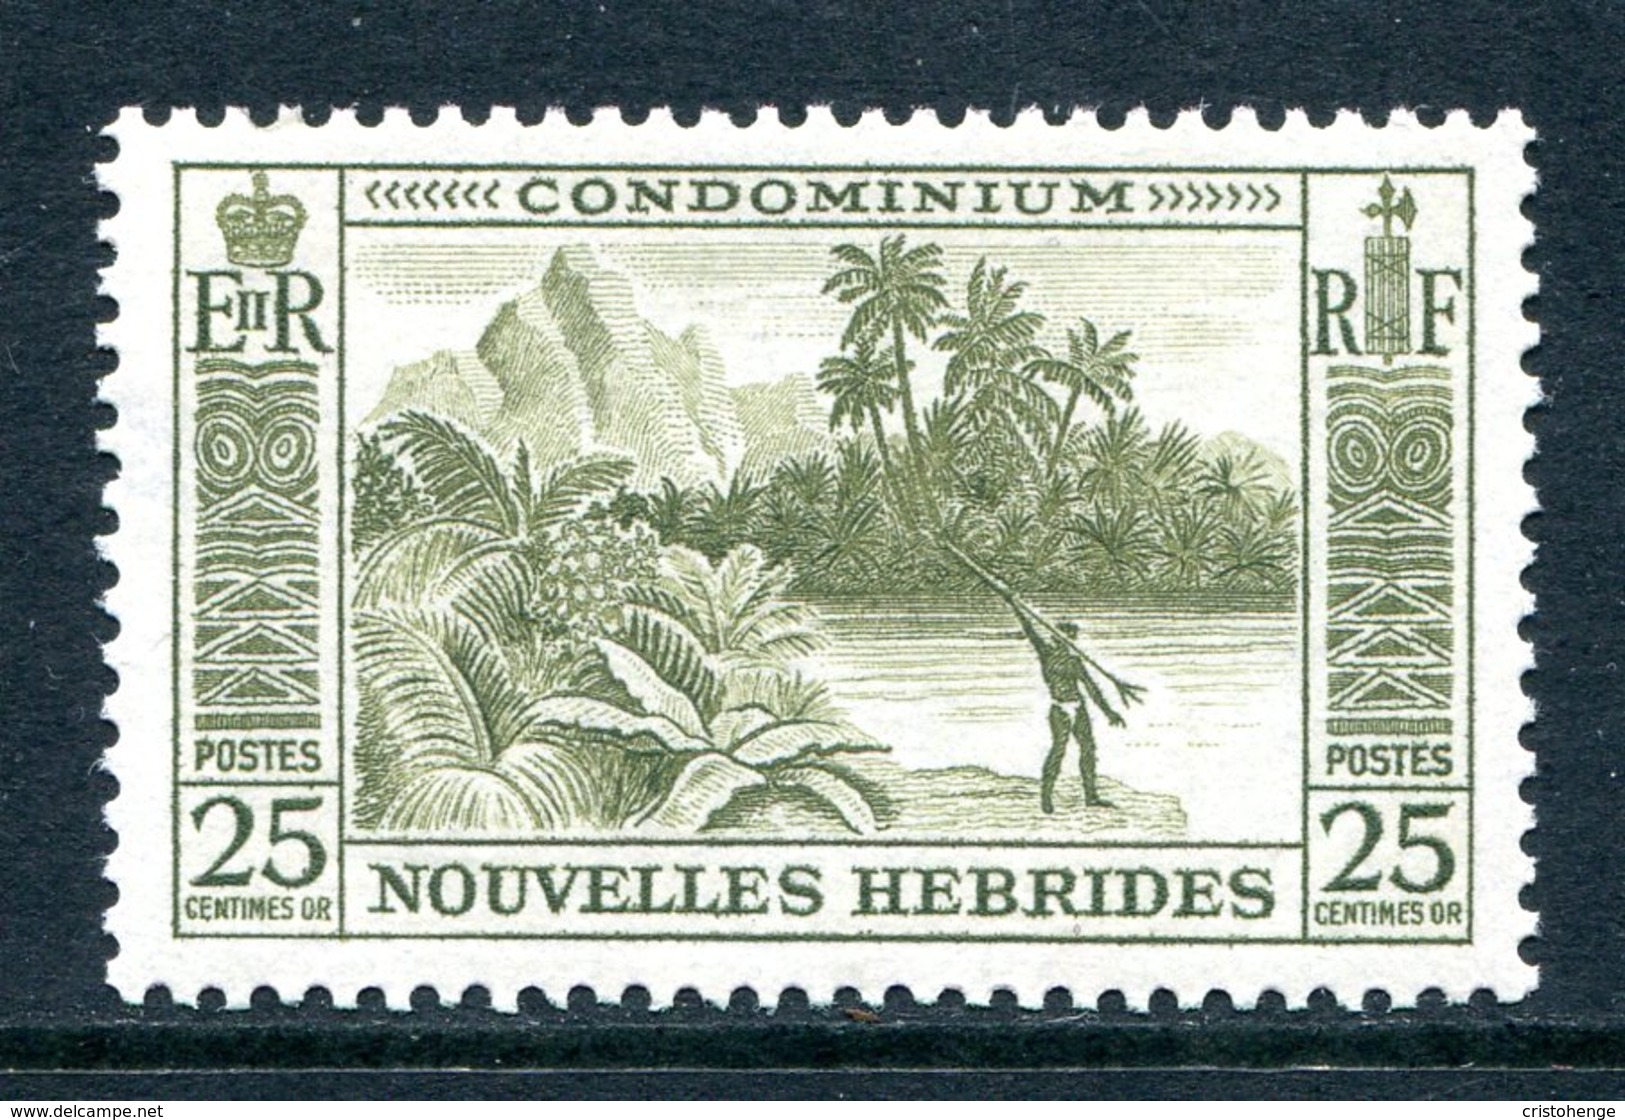 Nouvelles Hebrides 1957 Pictorials - 25c Value LHM (SG F100) - Used Stamps